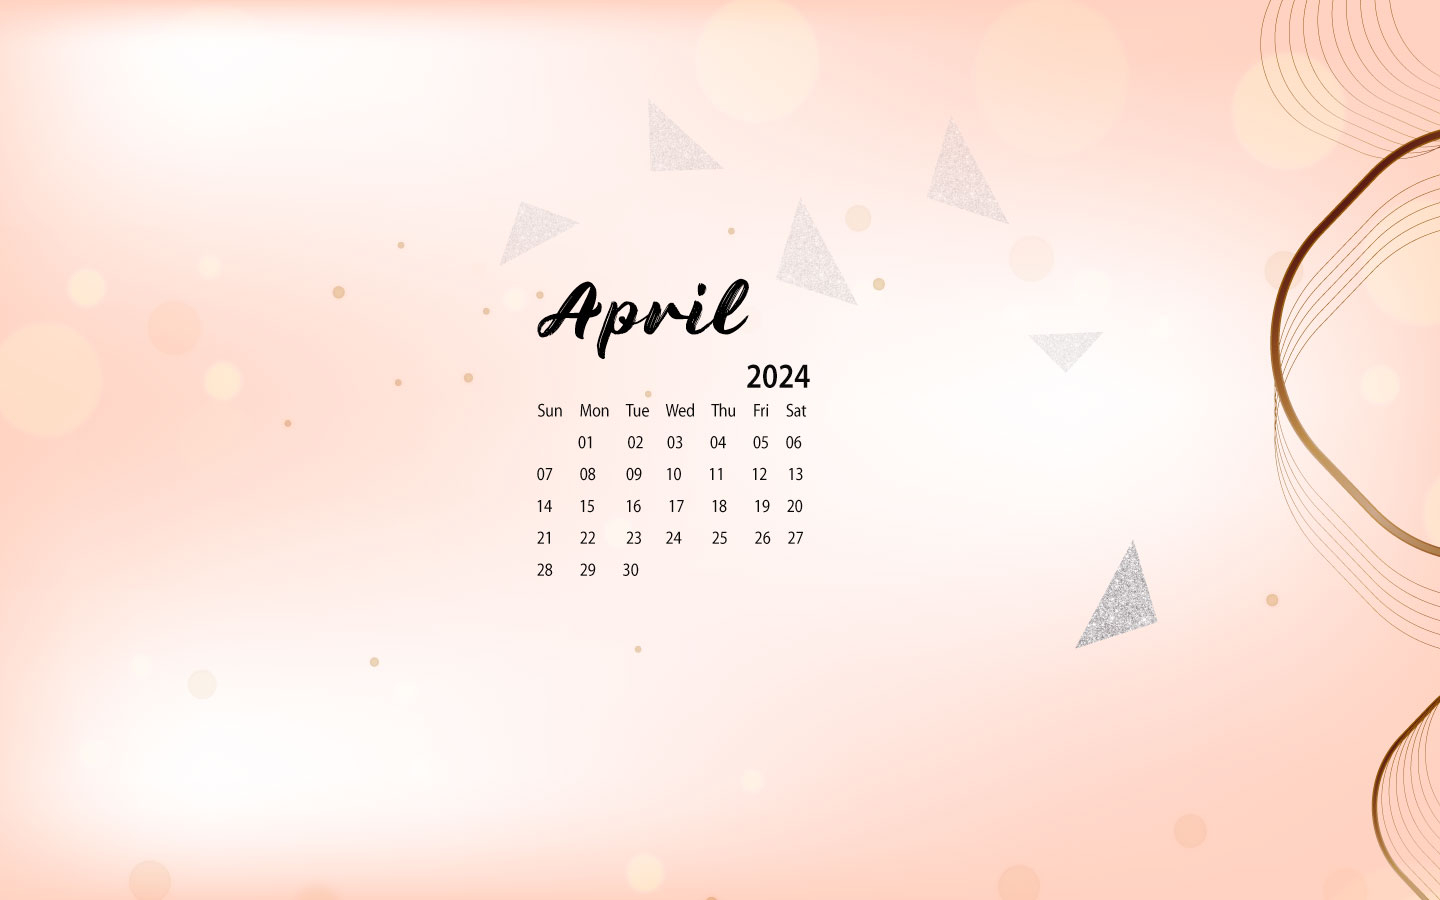 April 2024 Desktop Wallpaper Calendar - Calendarlabs within April Calendar Wallpaper 2024